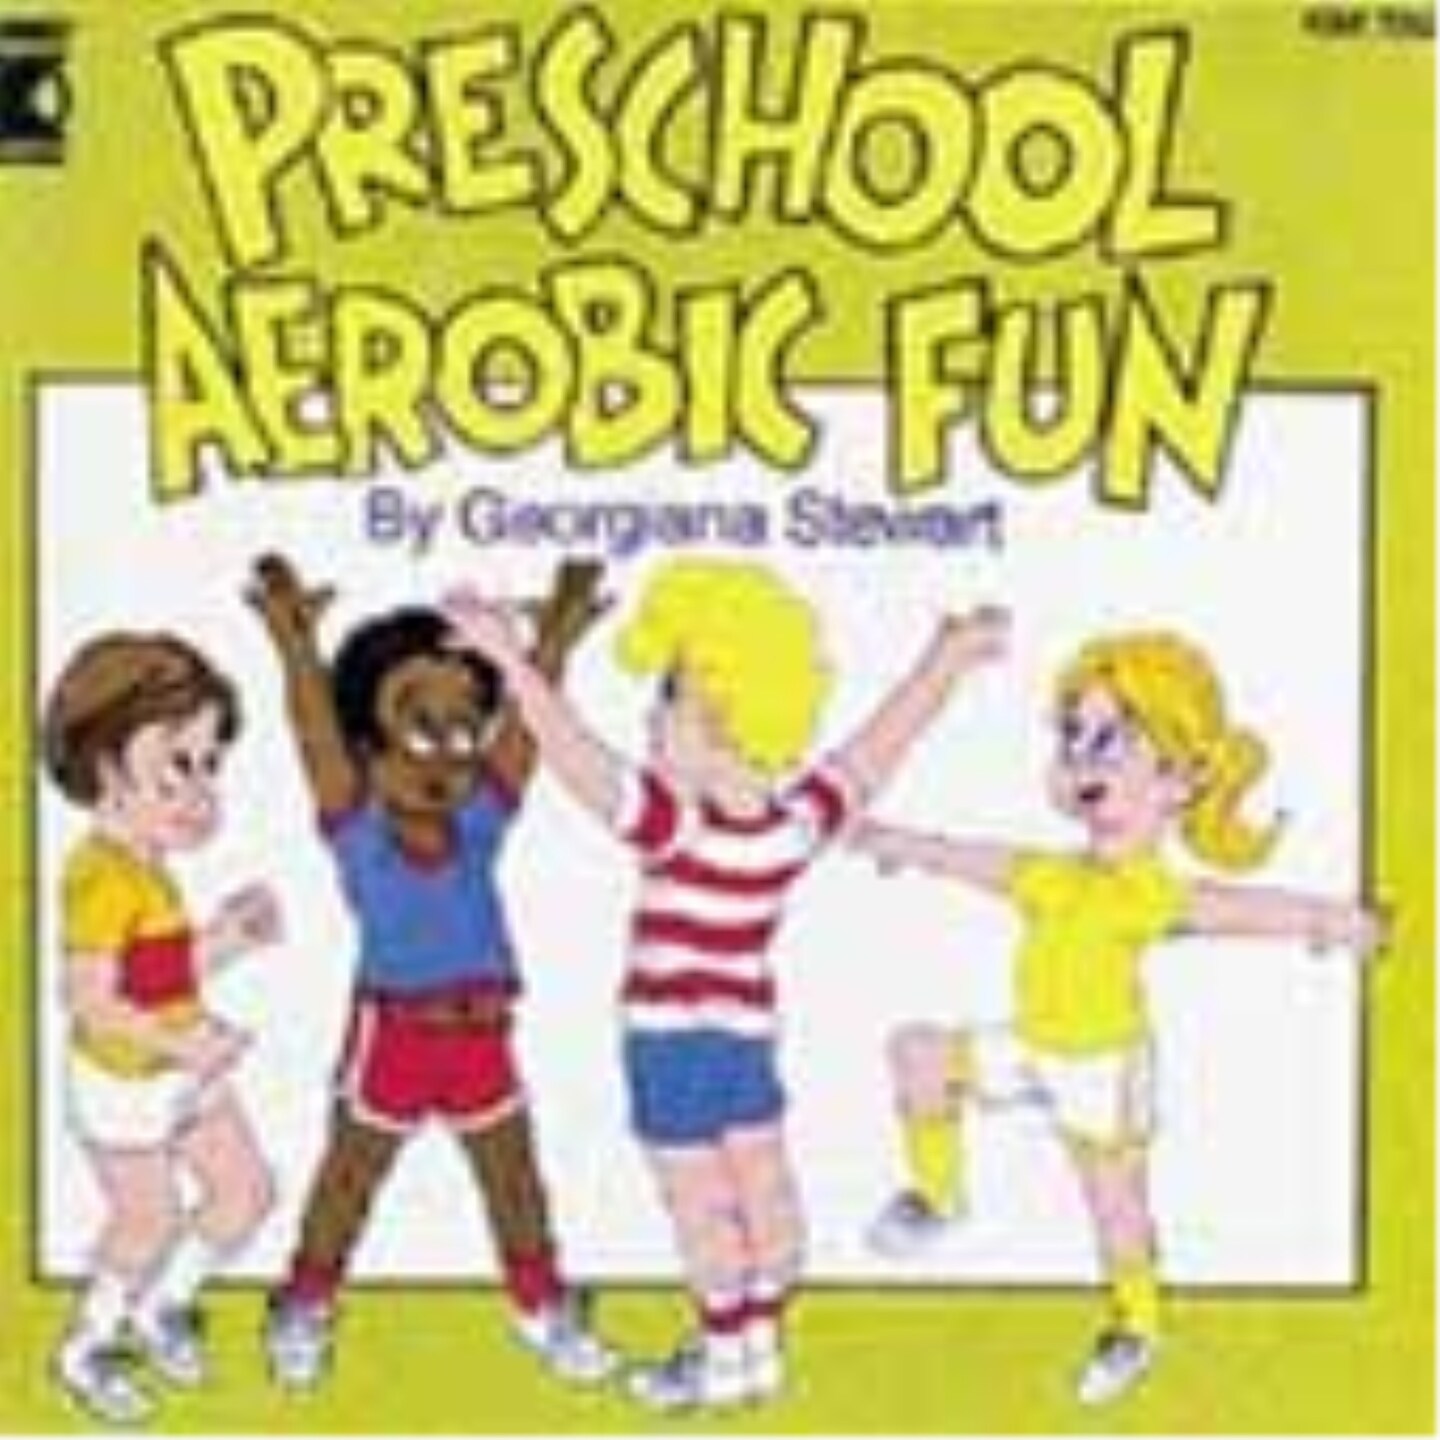 Preschool Aerobic Fun Educational CD